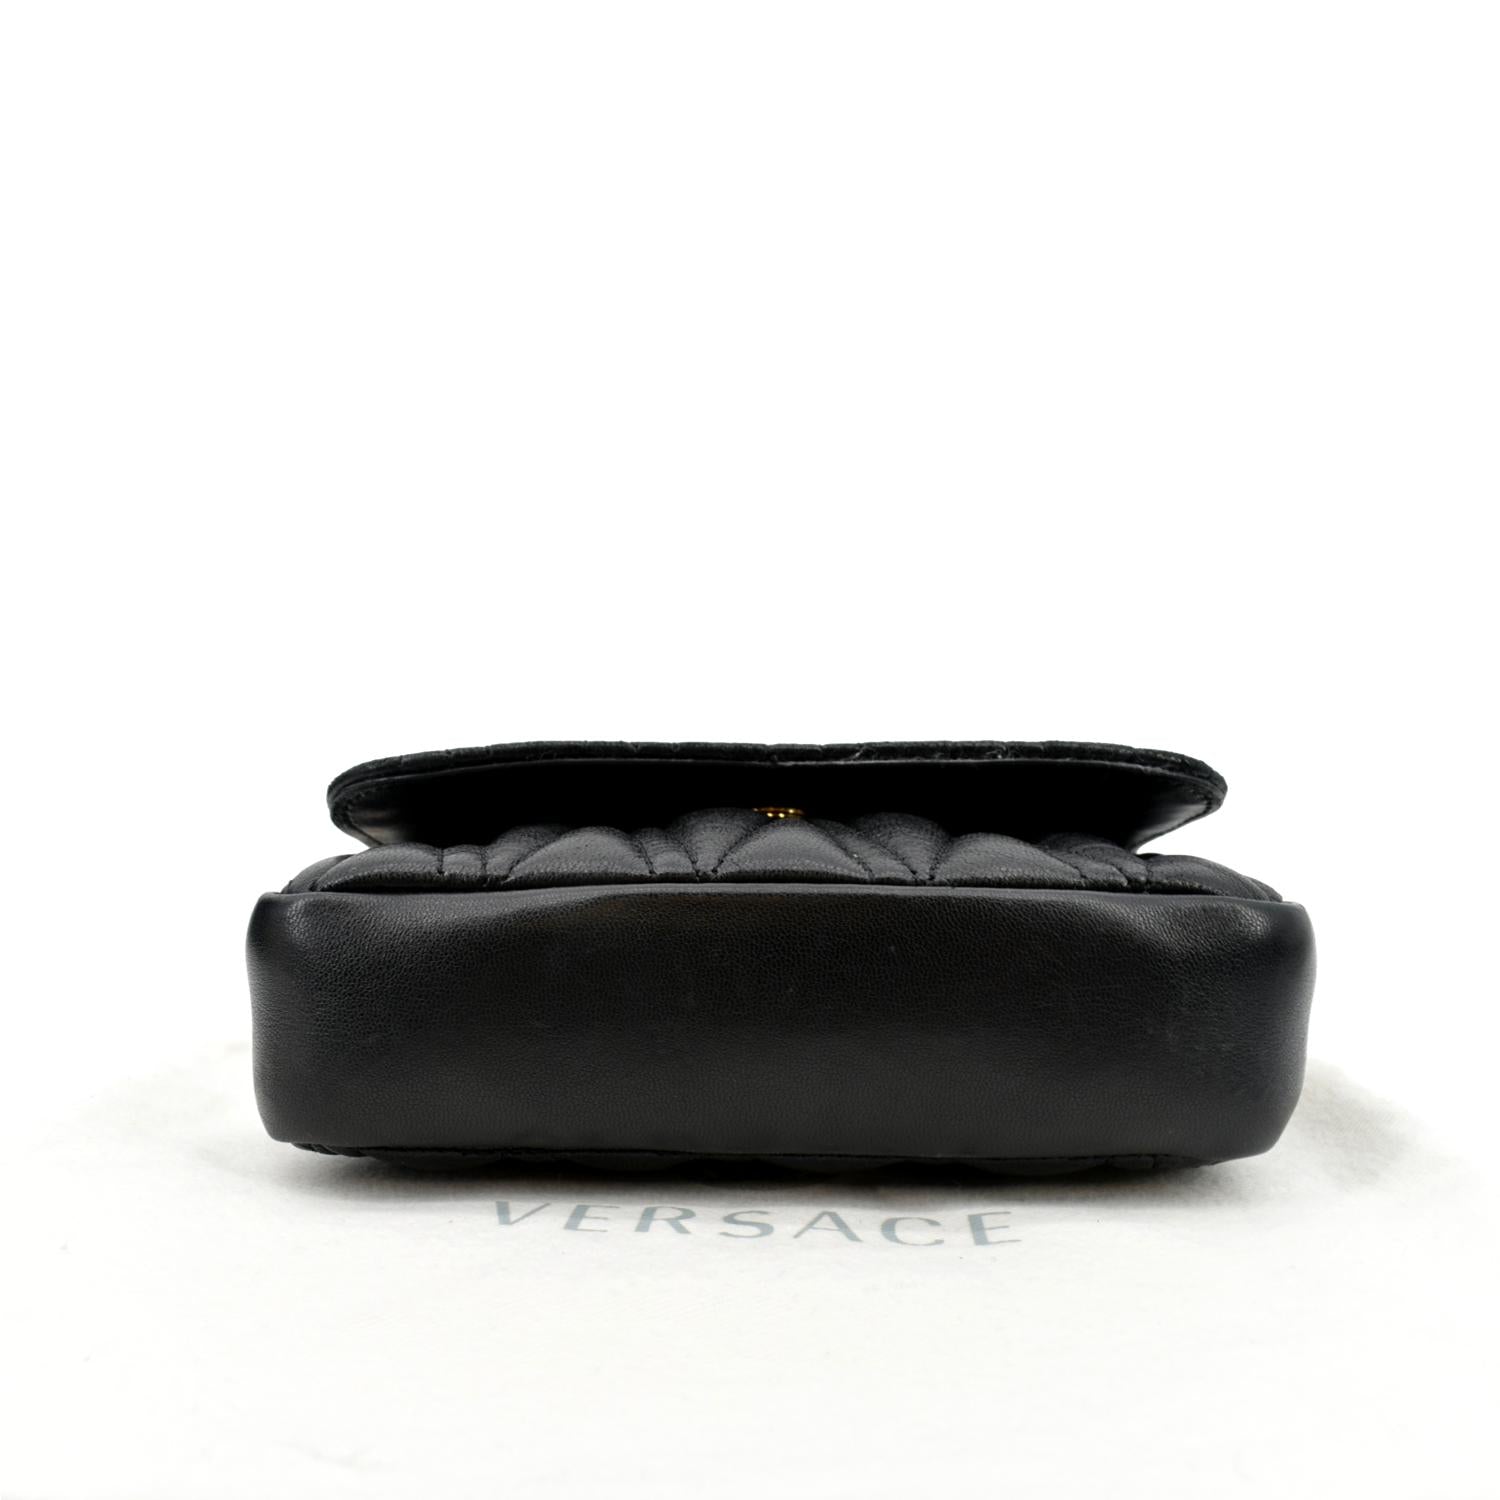 Virtus leather crossbody bag Versace Black in Leather - 35306964